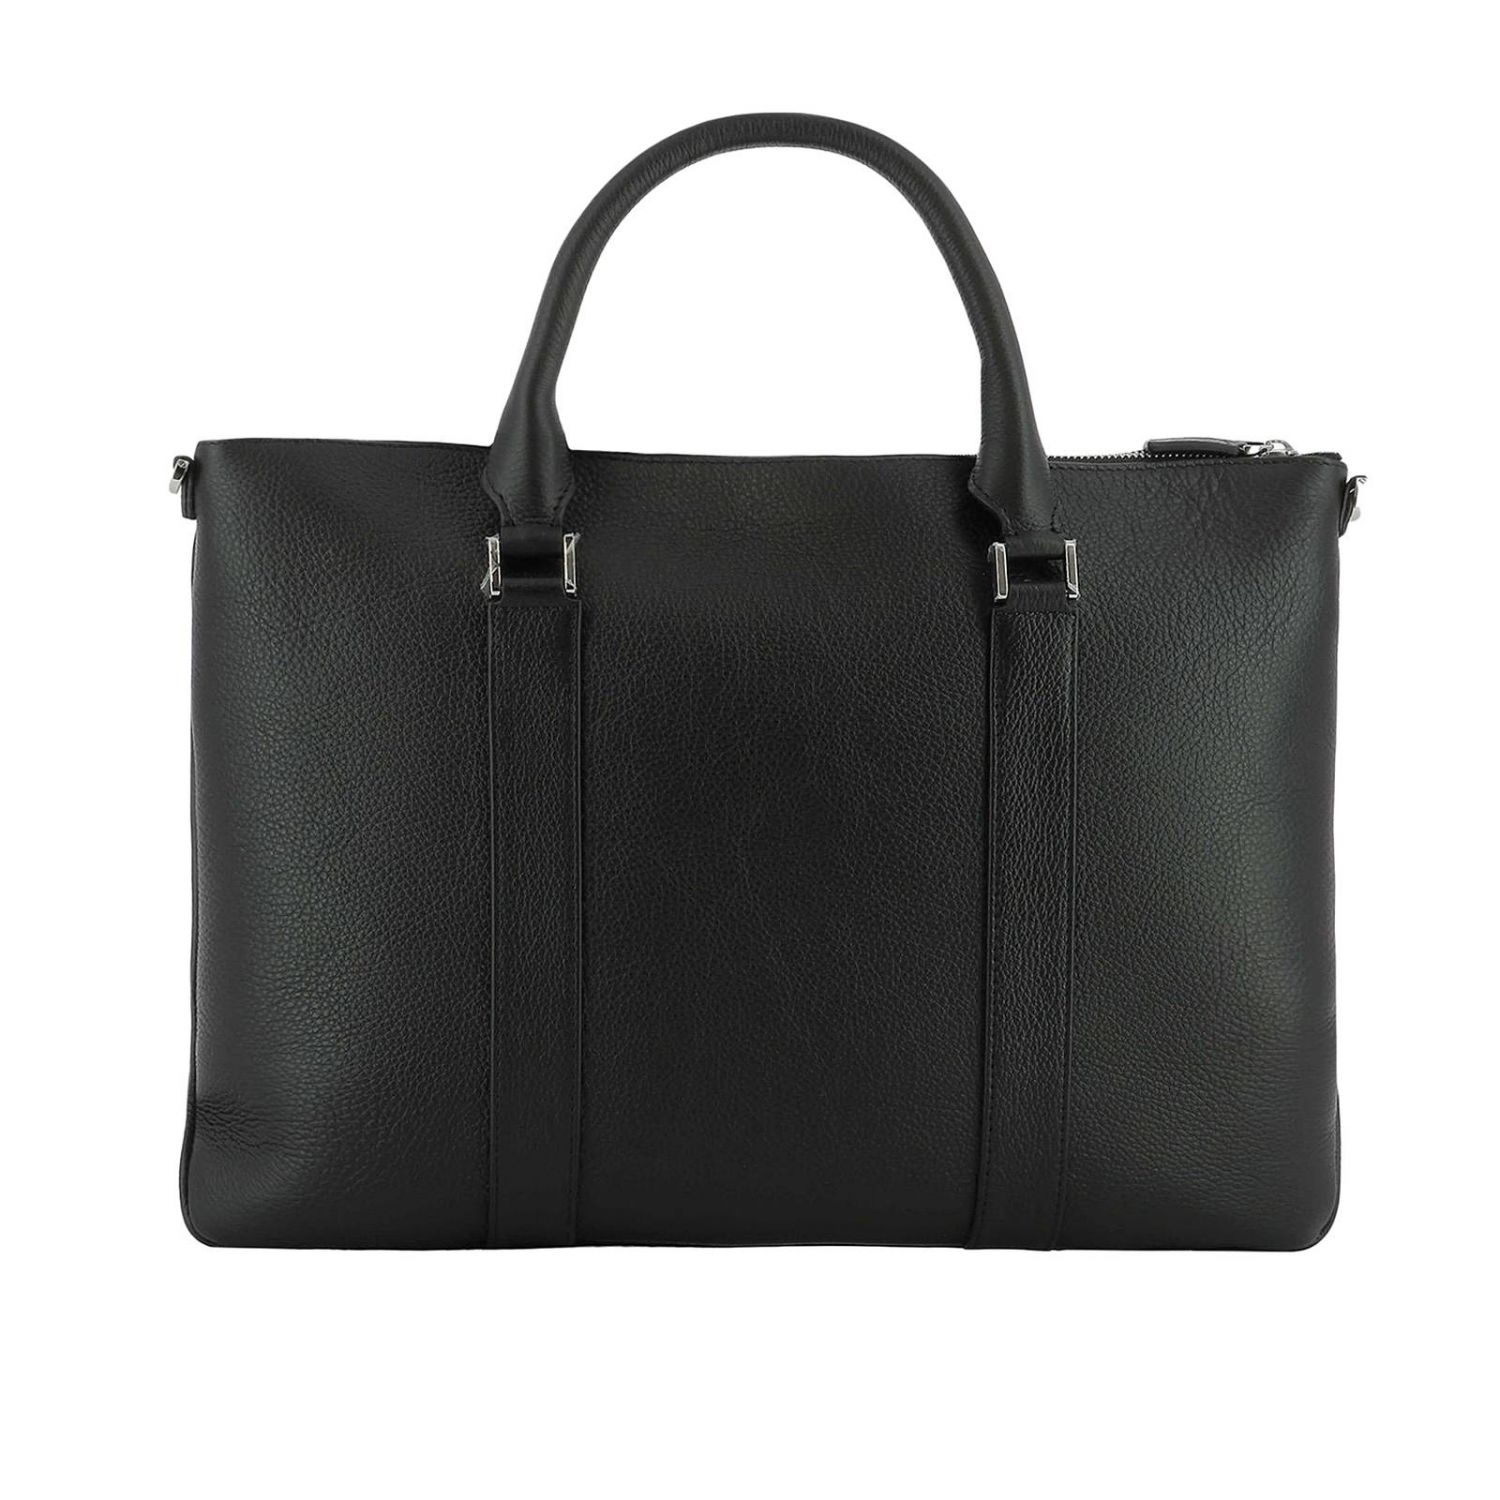 Montblanc Outlet: Bags men | Bags Montblanc Men Black | Bags Montblanc ...